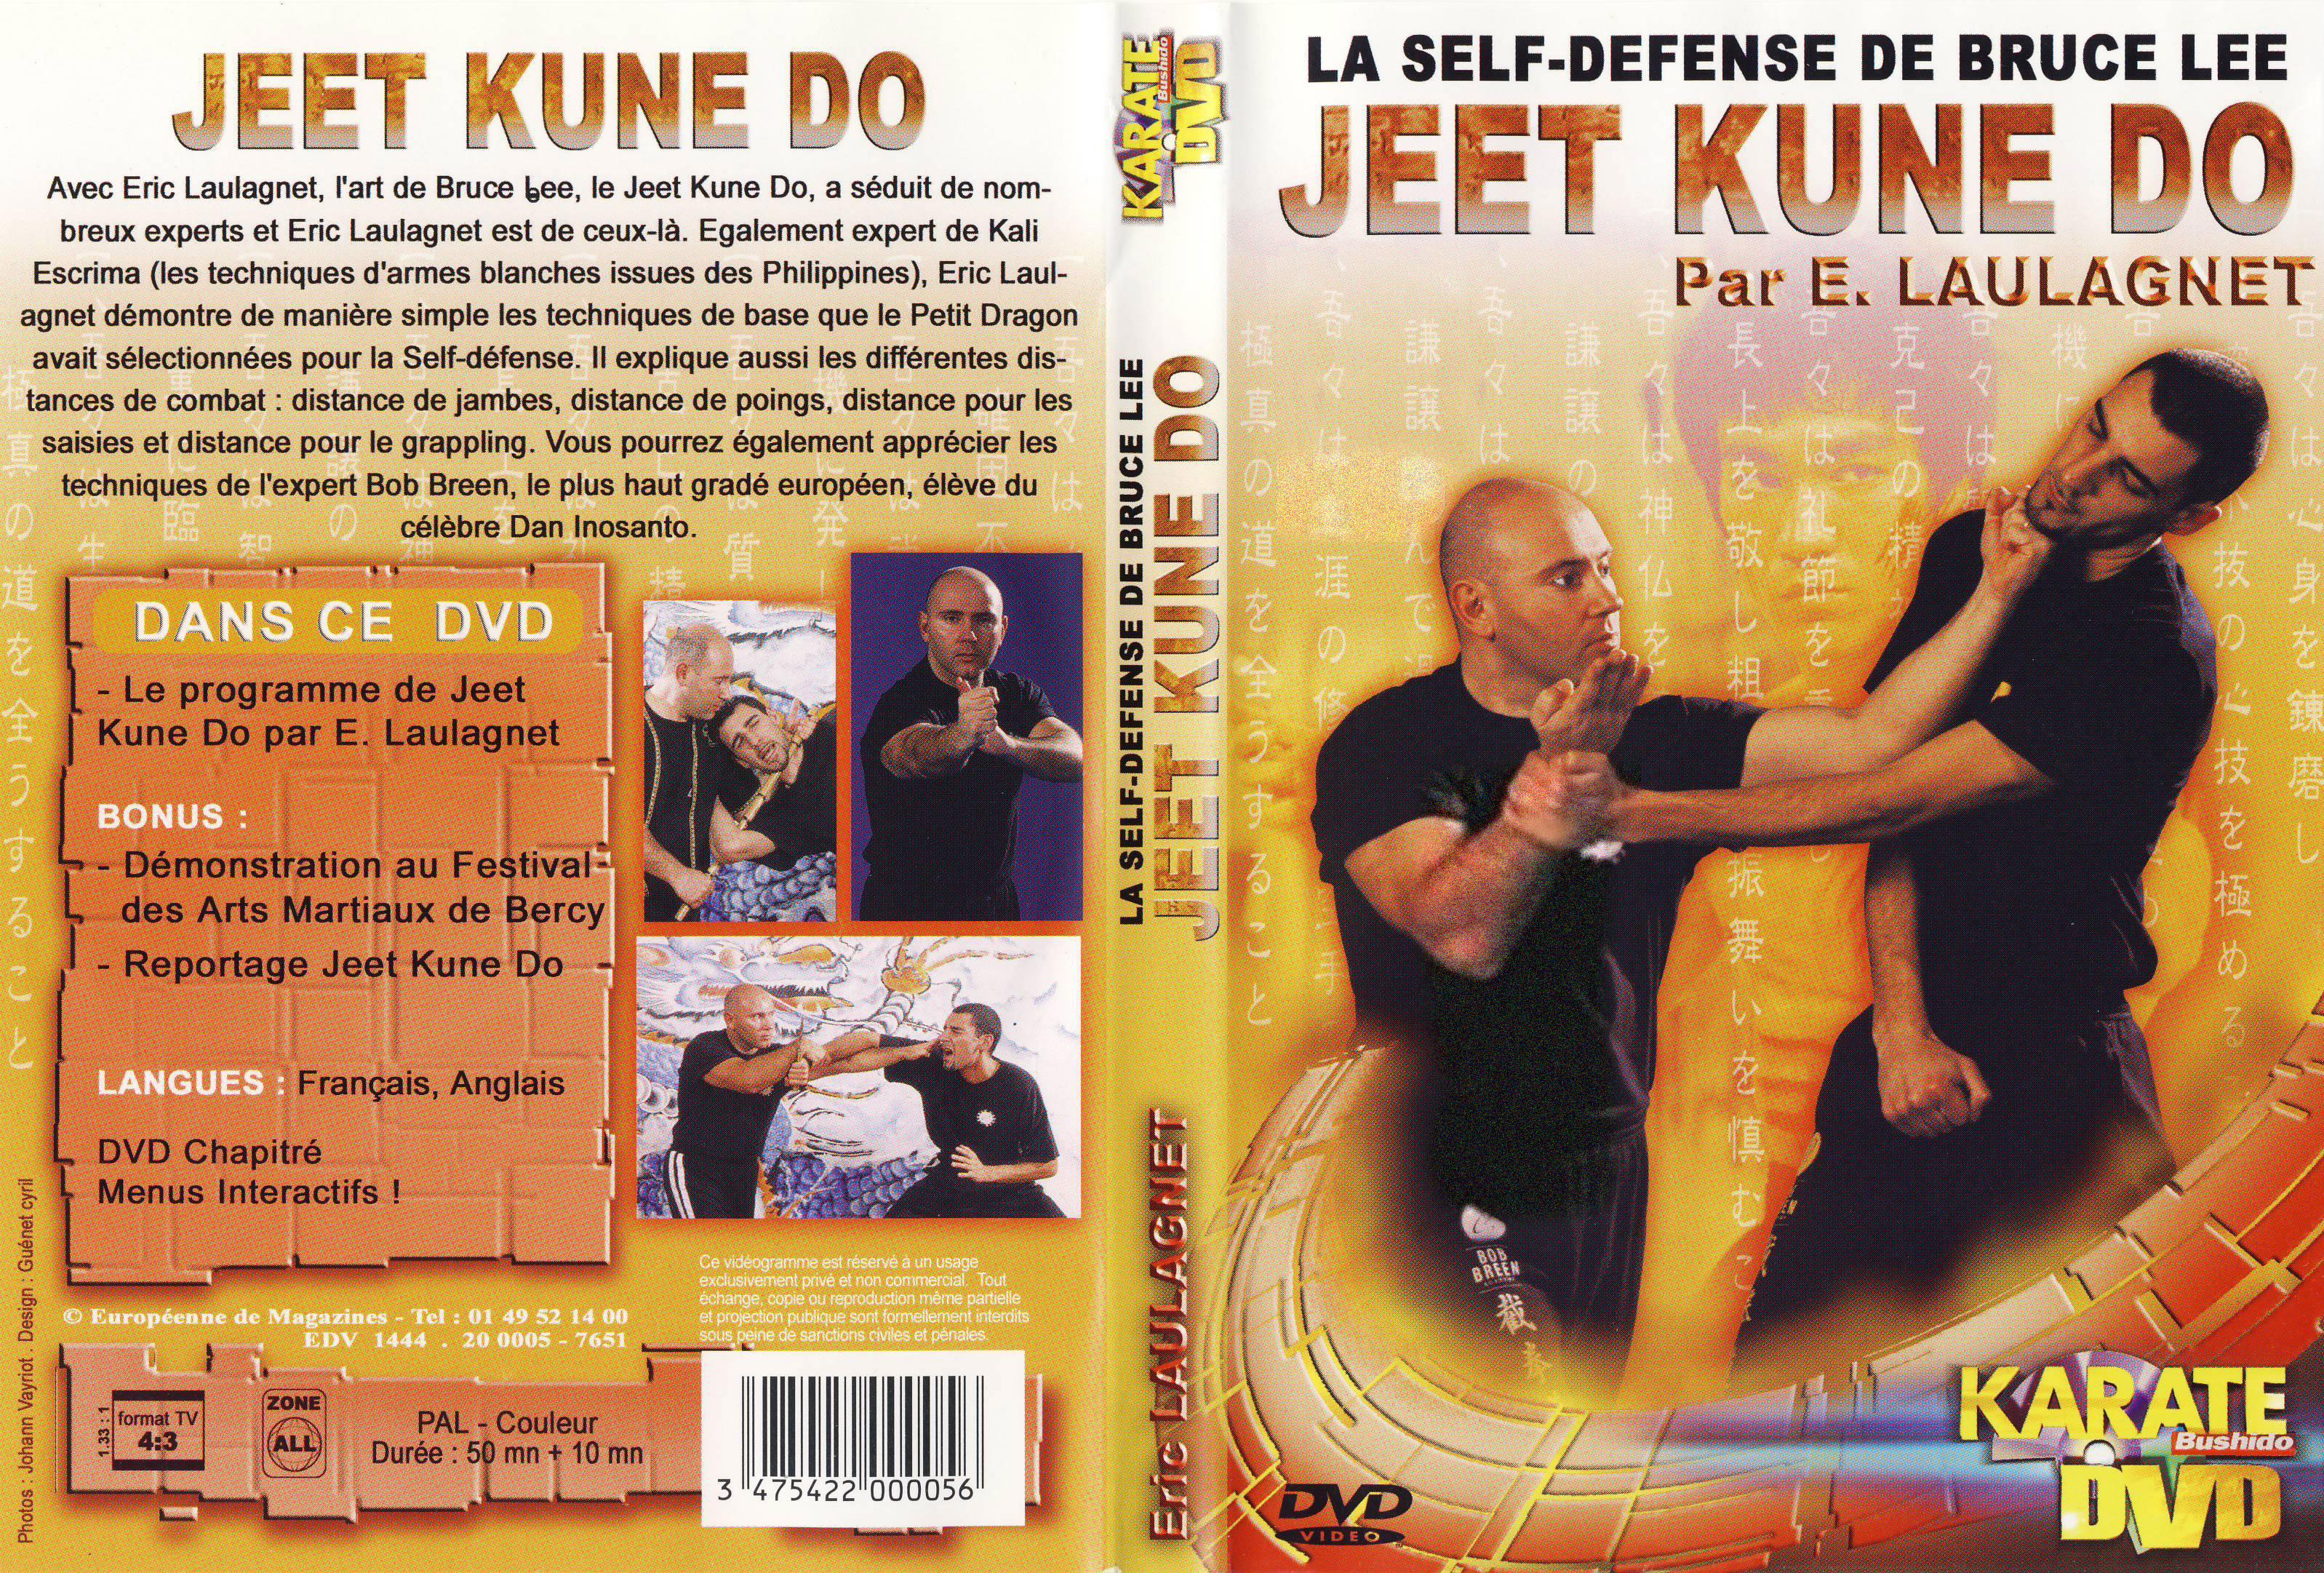 Jaquette DVD La self defense de Bruce Lee Jeet Kune Do